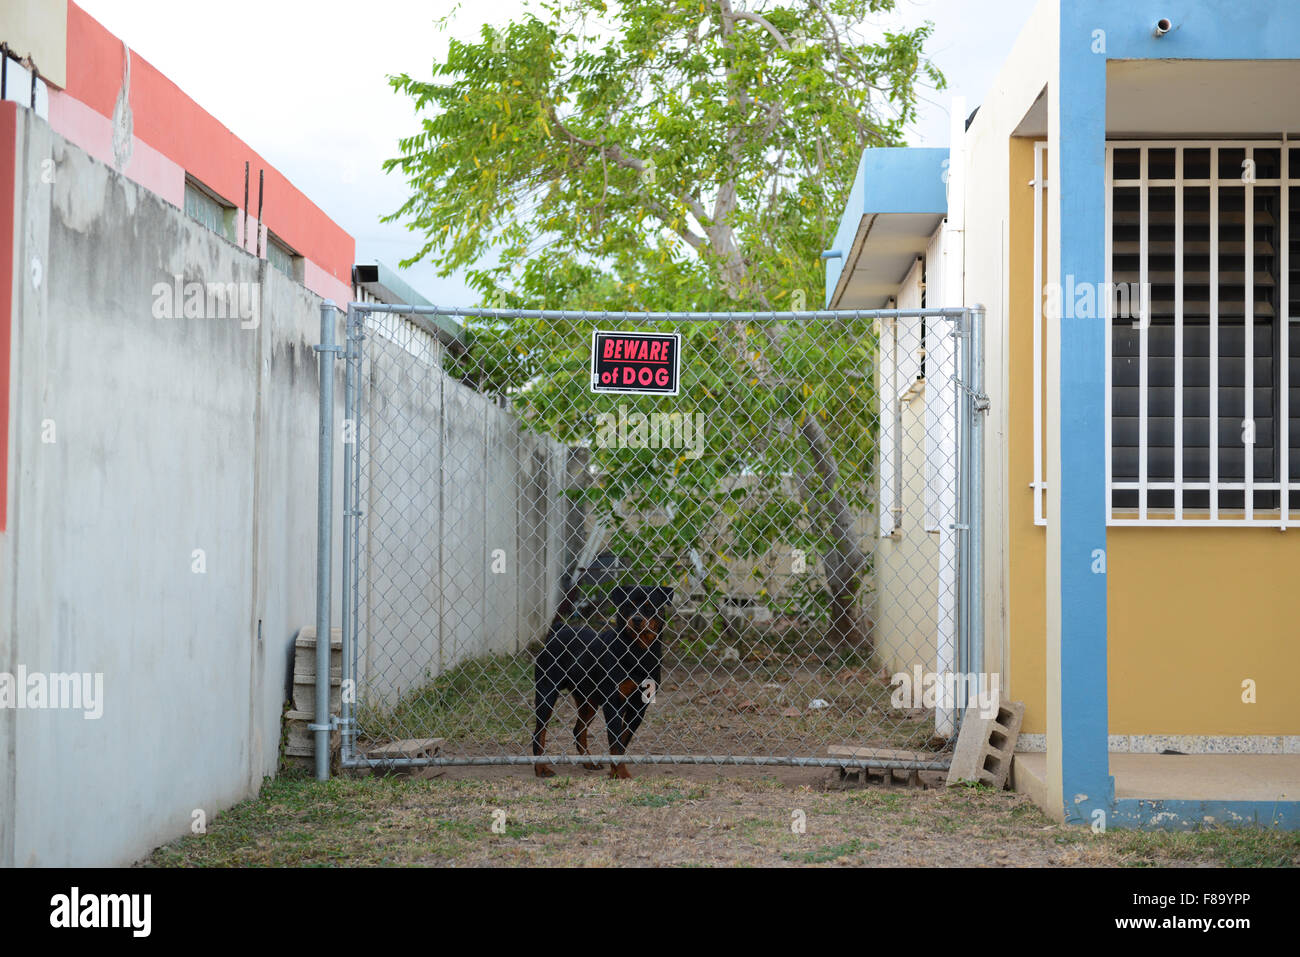 Dog behind a fence with a sign 'Beware of god'. Juana Diaz, Puerto Rico. Caribbean Island. USA territory. Stock Photo